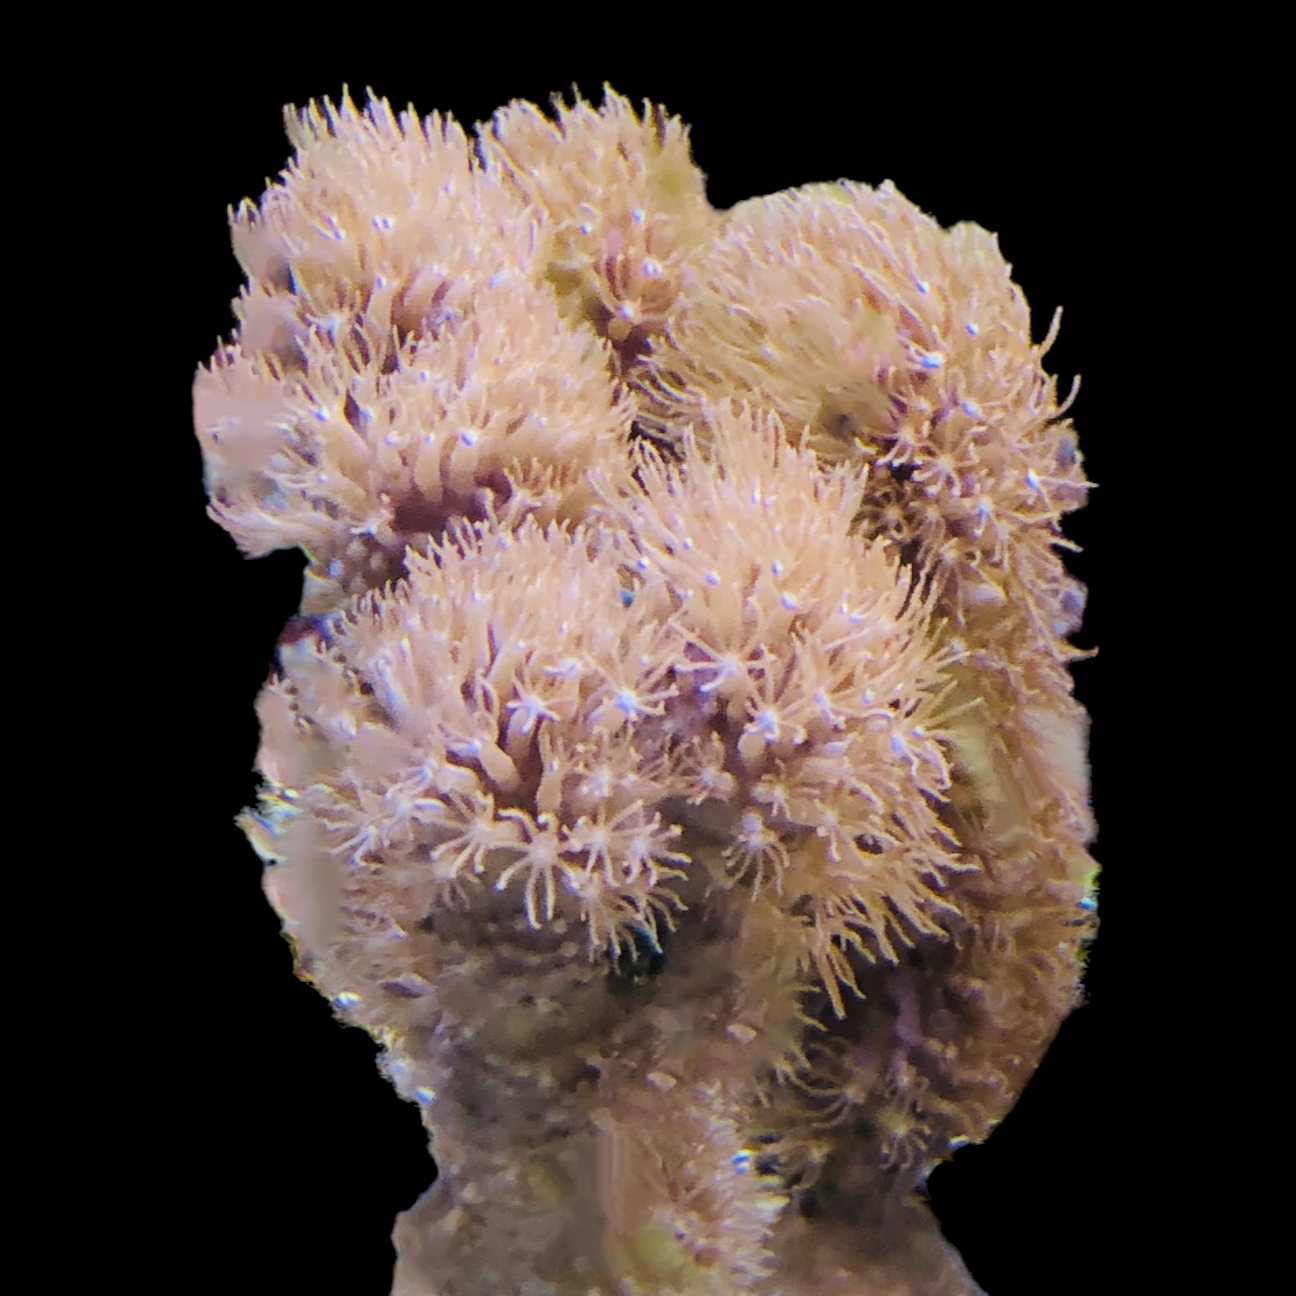 Corky Sea Finger Gorgonian-Photosynthetic